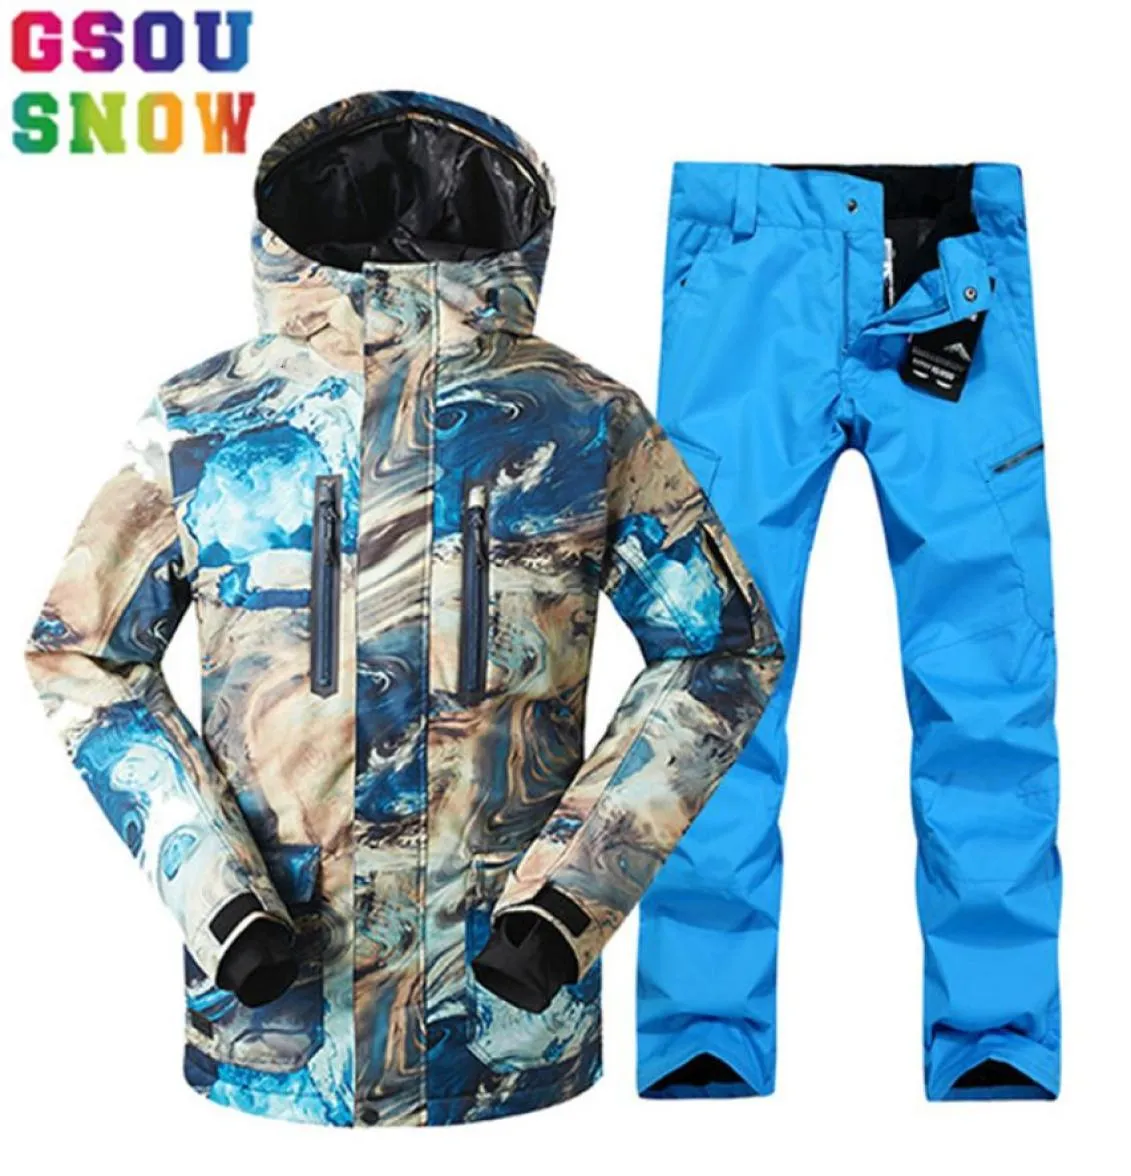 GSOU Snow Brand Ski Suit Men Ski Jacket Pants Snowboard Sets Water Proof Mountain Skiing Suit Winter Male Outdoor Sport Clothingt193523160